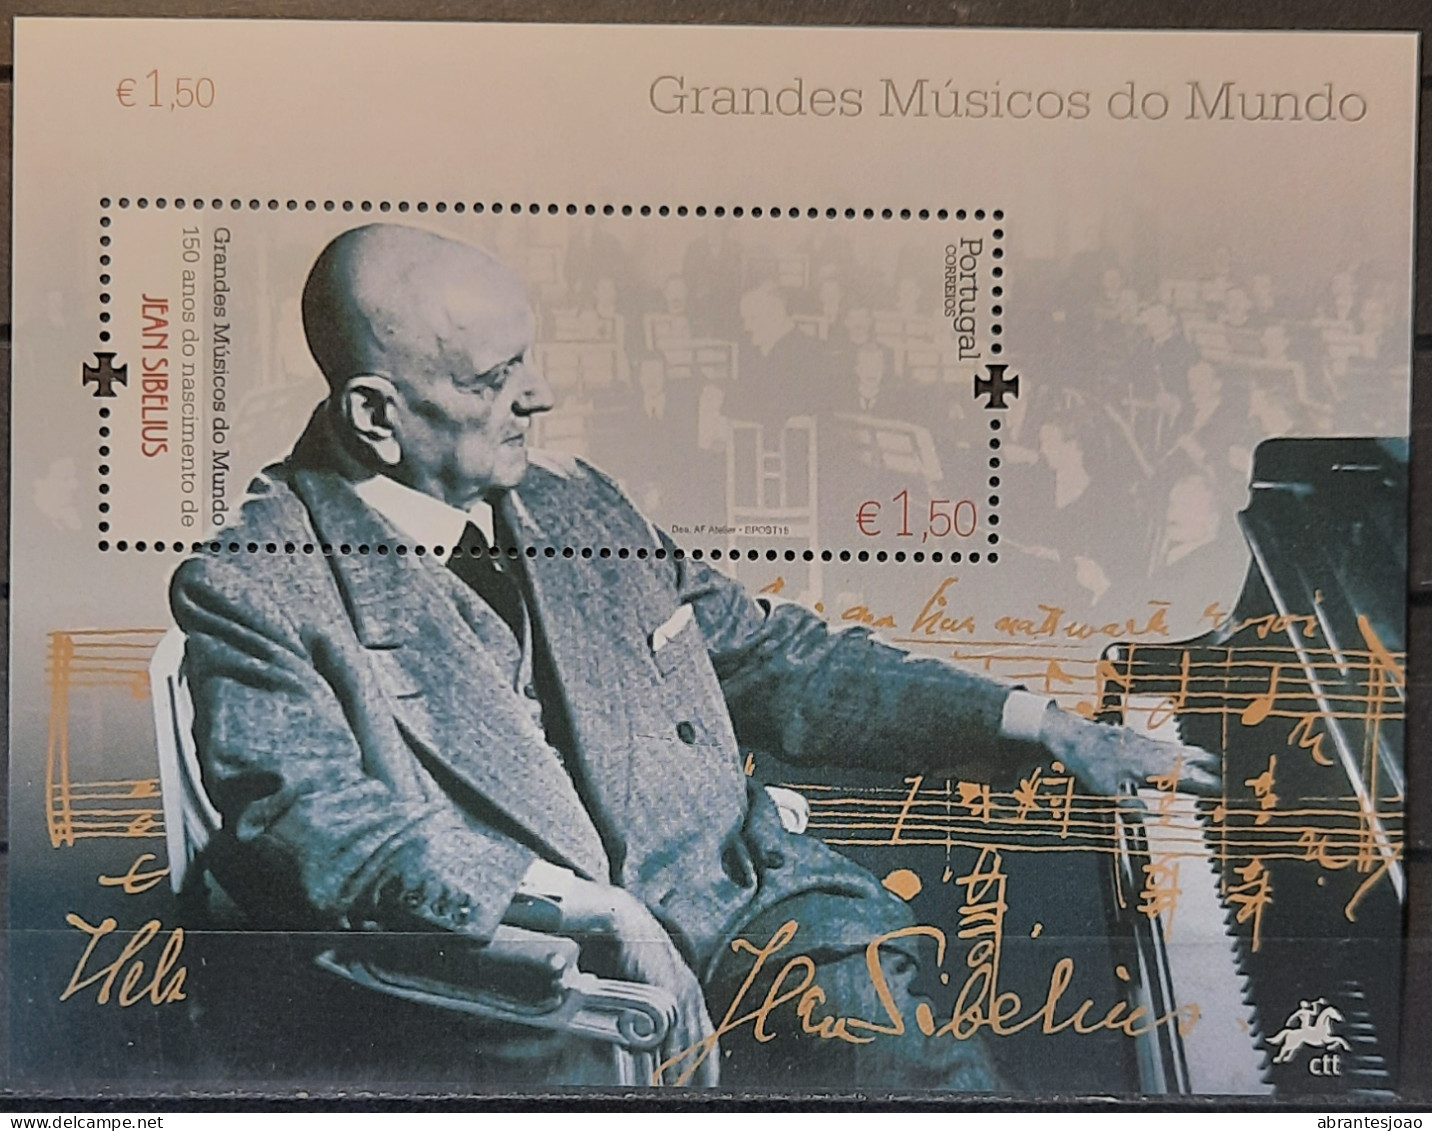 2015 - Portugal - MNH - Great Musicians Of The World - Jean Sibelius - 1 Stamp + Souvenir Sheet Of 1 Stamp - Ongebruikt